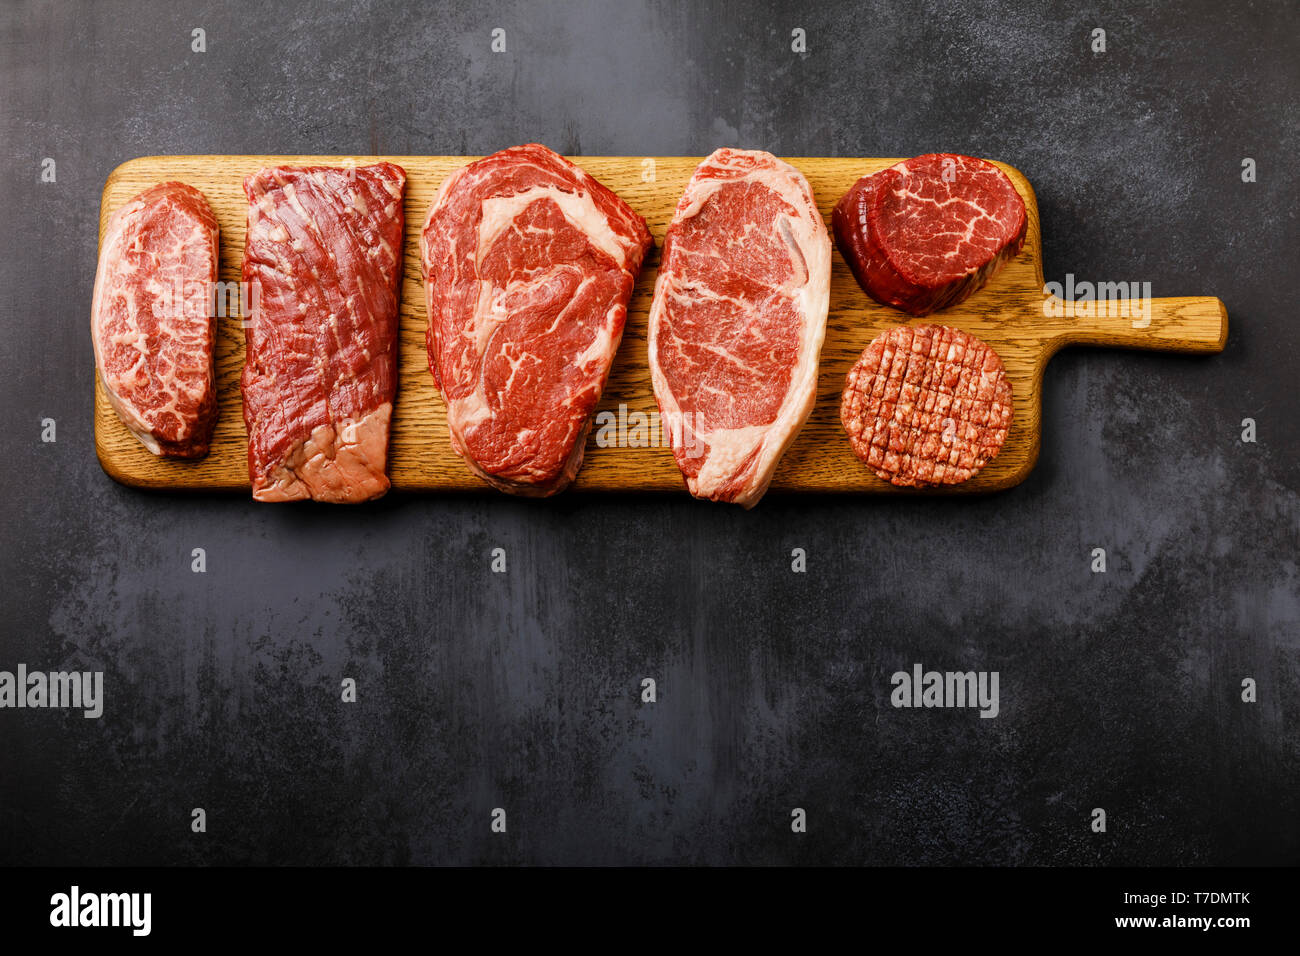 Variety of Raw Black Angus Prime meat steaks Top Blade, Machete, Rib Eye, Striploin, Tenderloin fillet Mignon, Cutlet Burger on wooden board on dark b Stock Photo